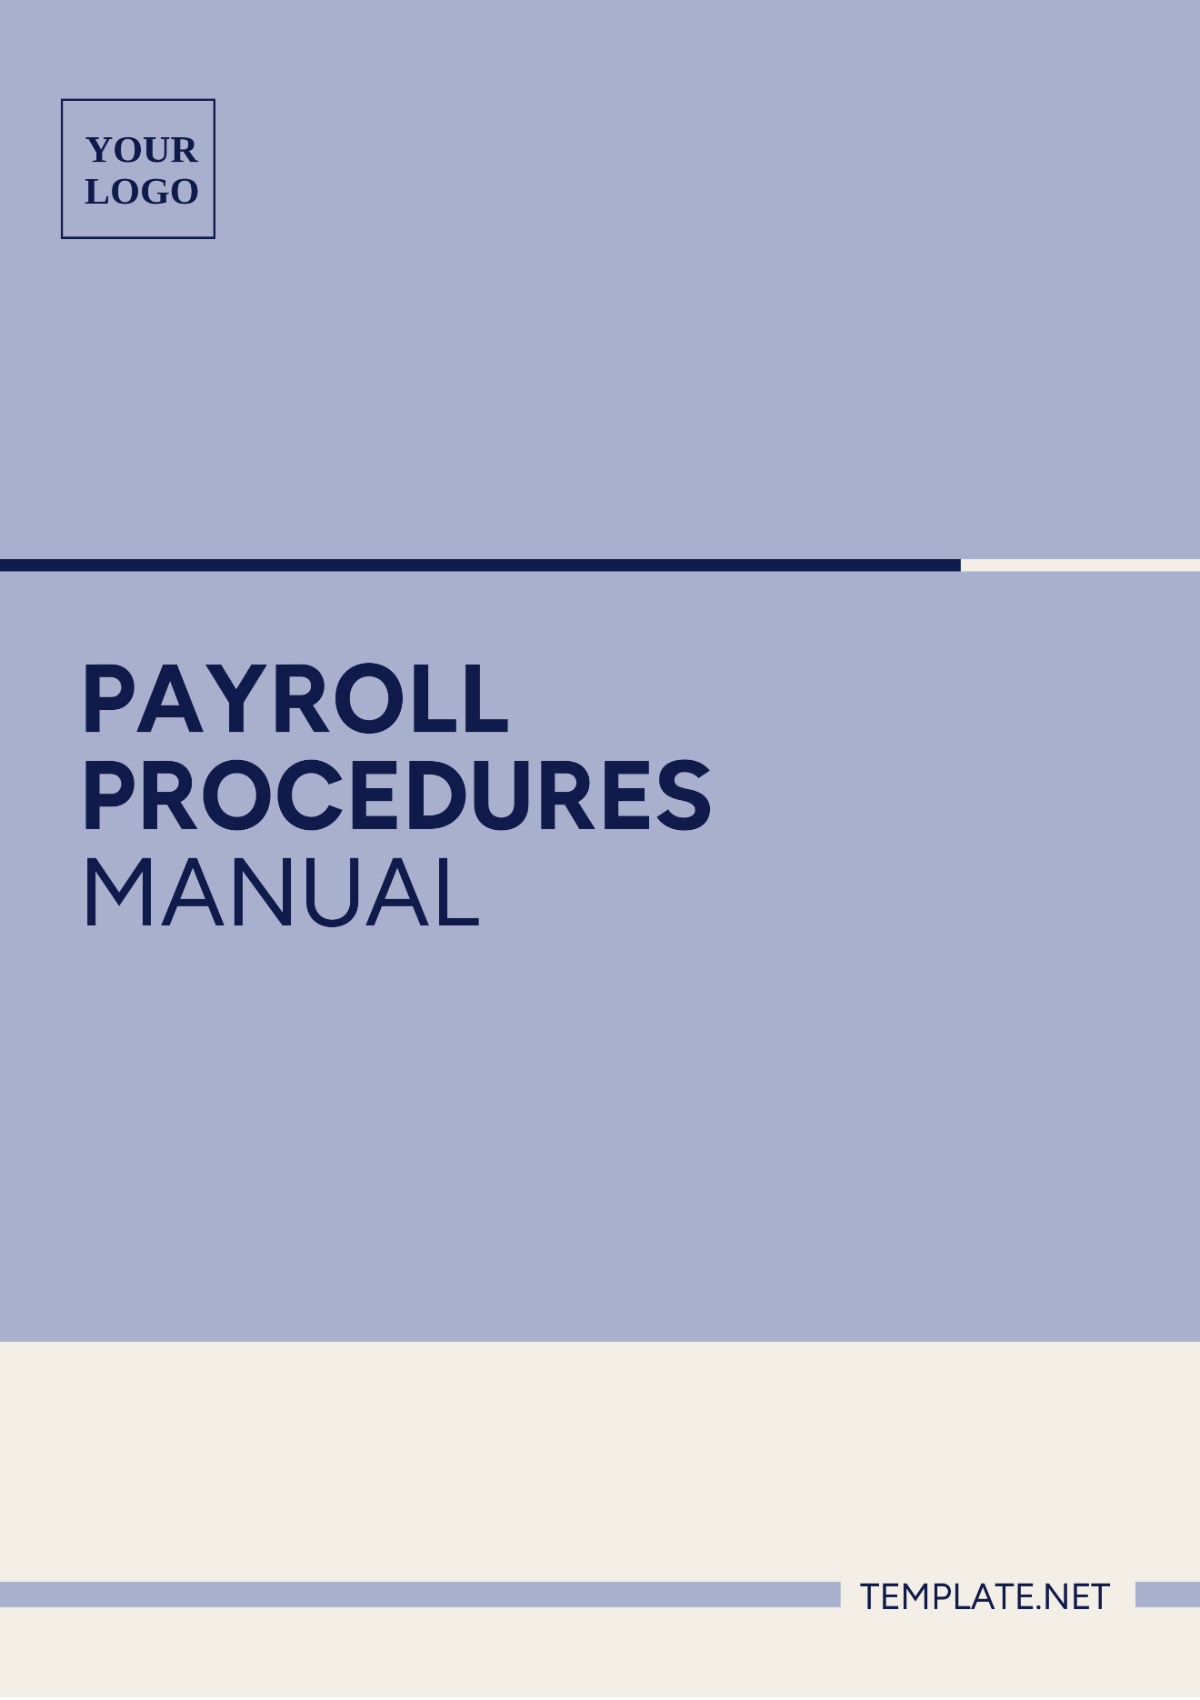 Free Payroll Procedures Manual Template